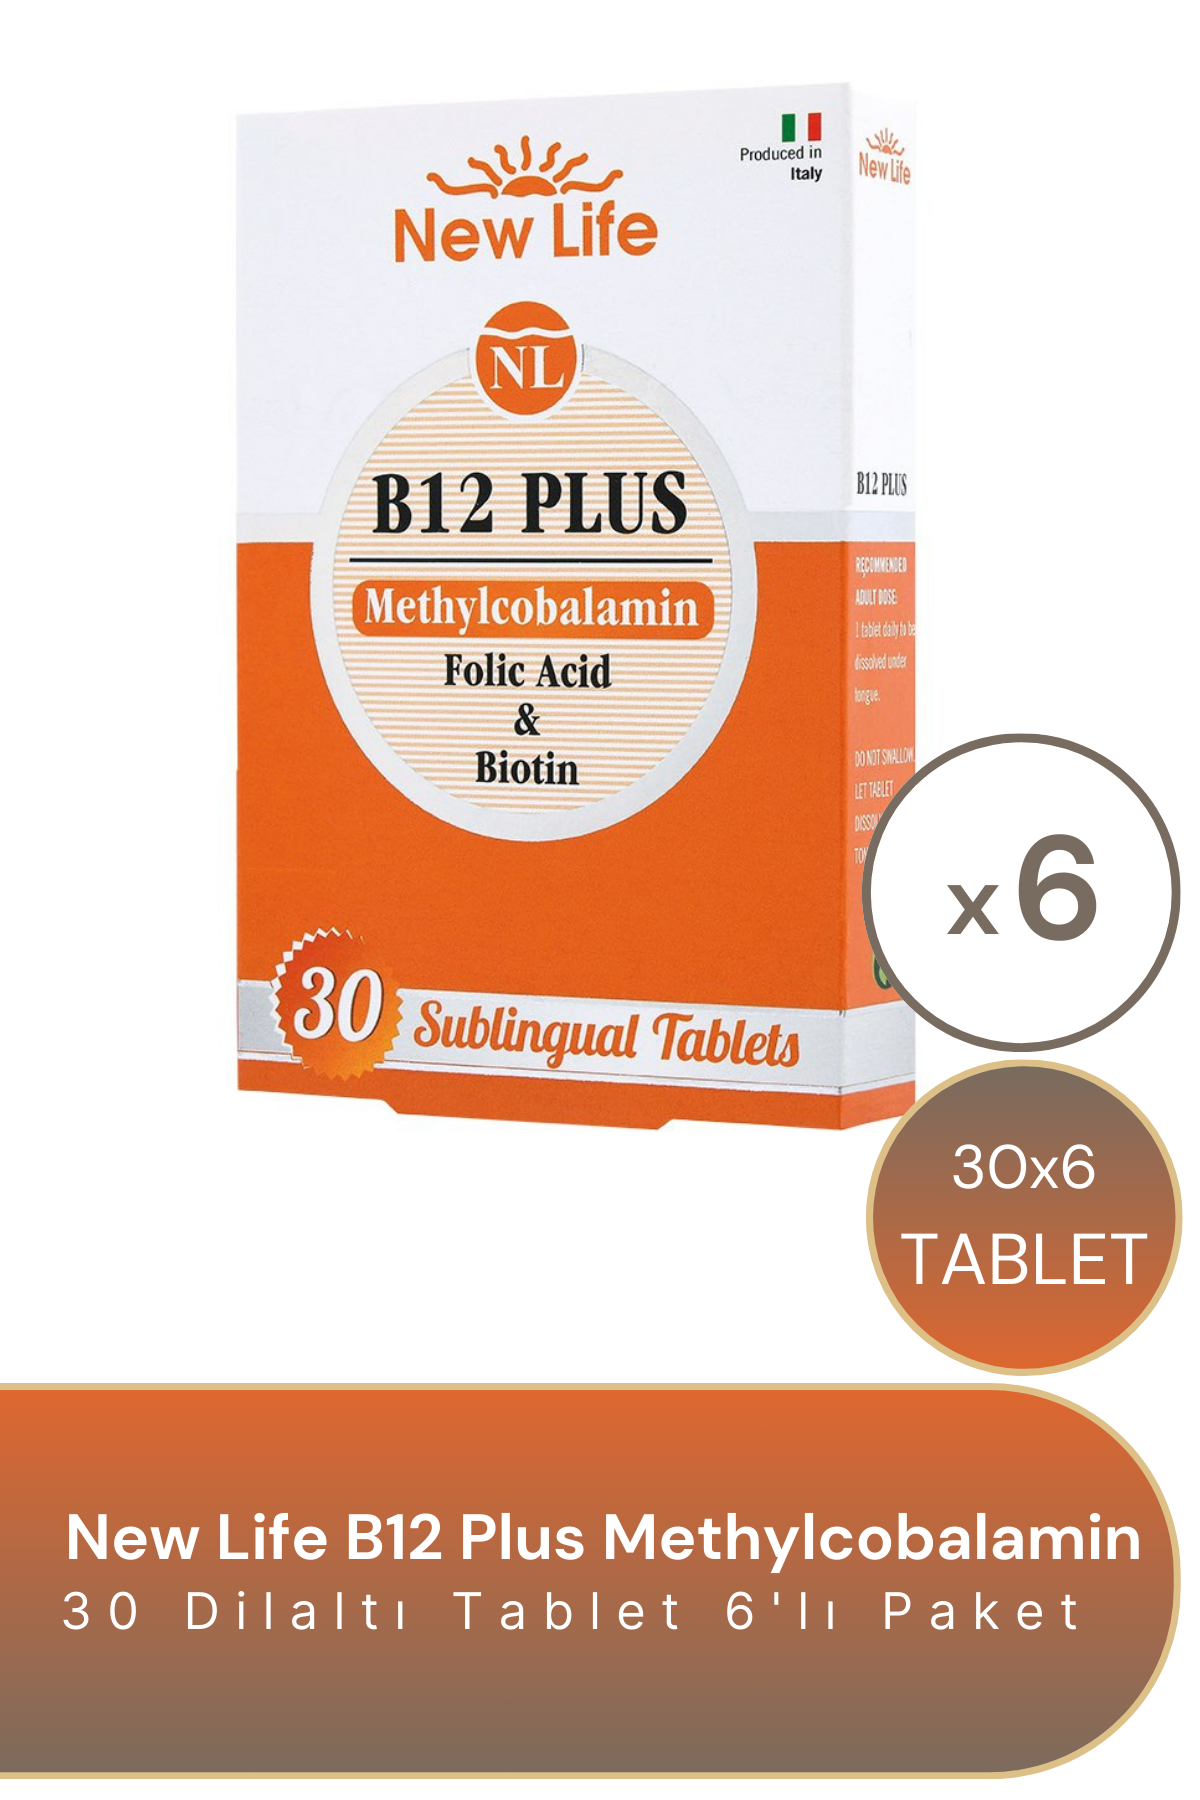 New Life Metilkobalamin B12 Plus 1000 mcg 30 Dilaltı Tablet 6'lı Paket